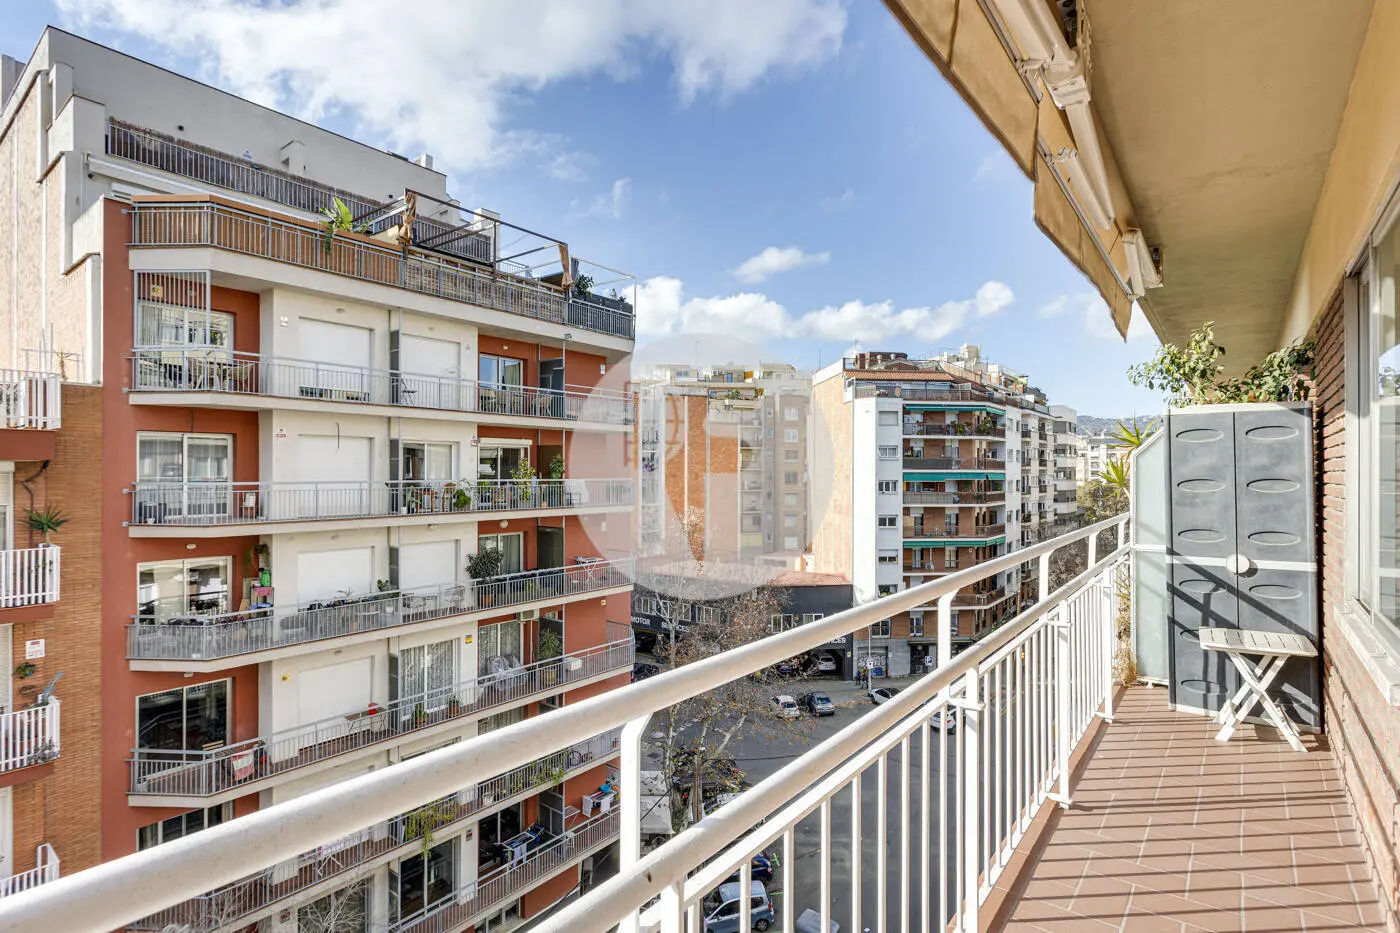 3-bedroom apartment located in the Nova Esquerra de l'Eixample neighborhood of Barcelona. 6